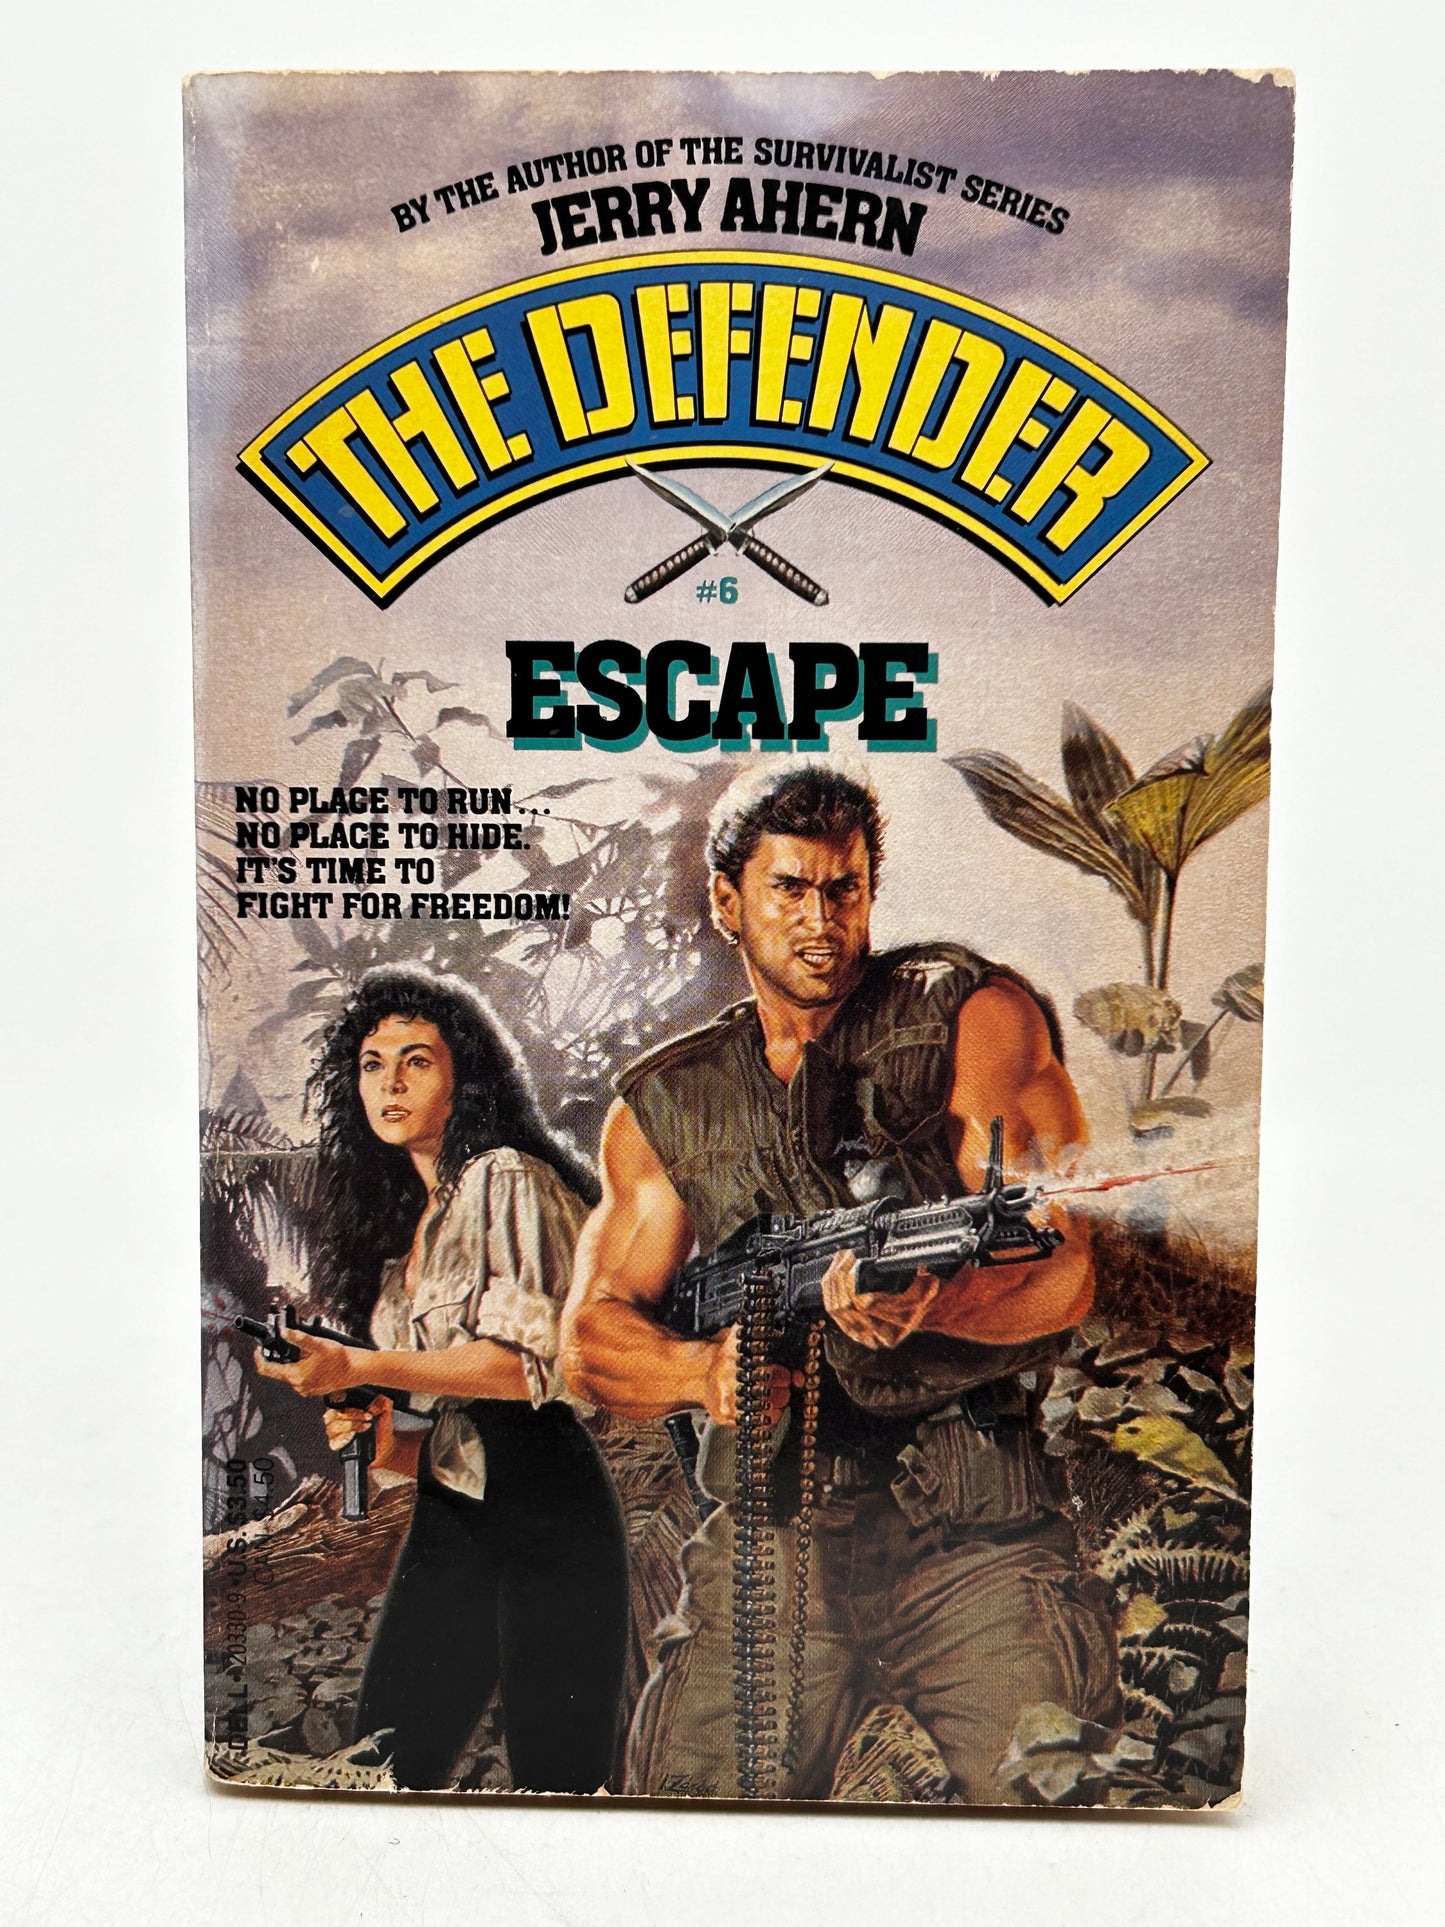 Defender #6 Escape DELL Paperback Jerry Ahern SF11